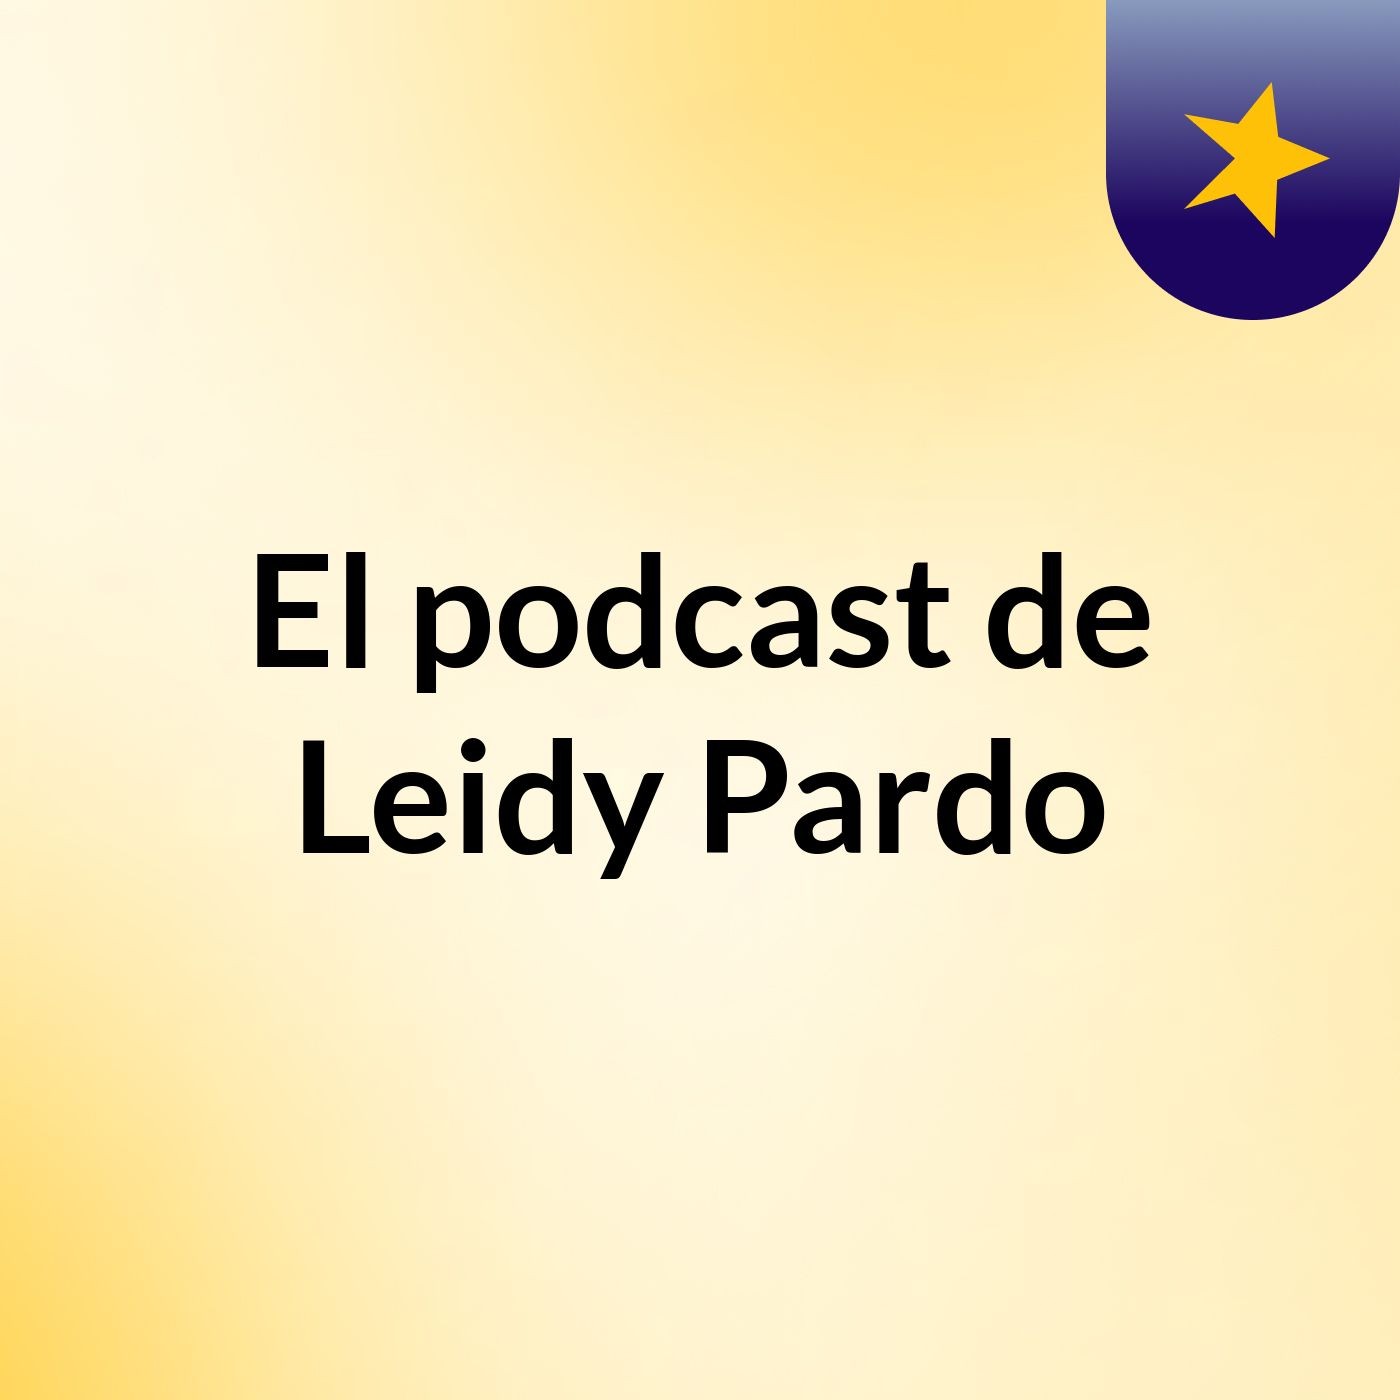 El podcast de Leidy Pardo